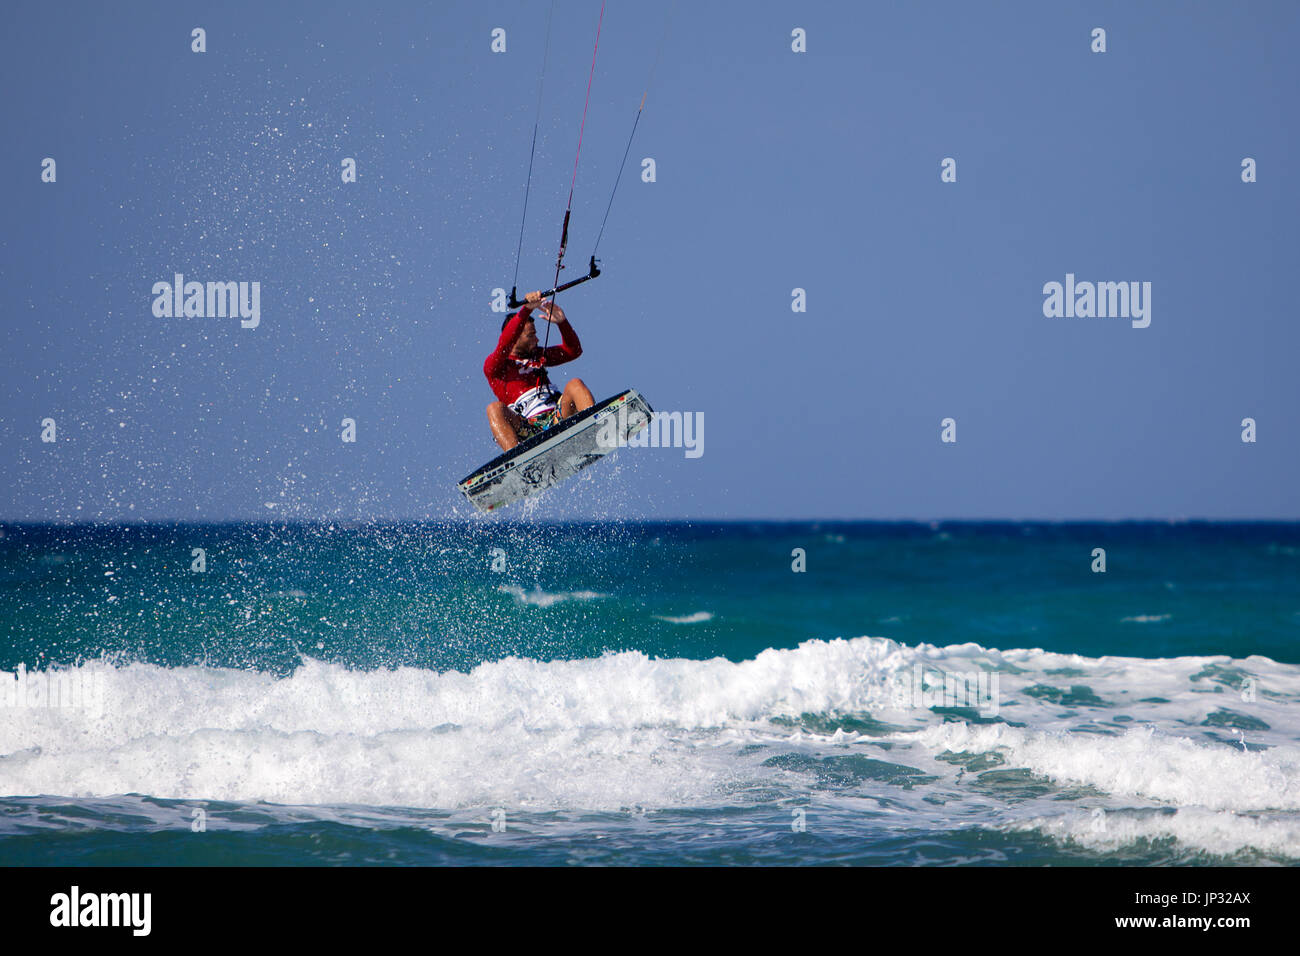 Europe, Greece, Kreta - a kitesurfer jumping in the waves Stock Photo